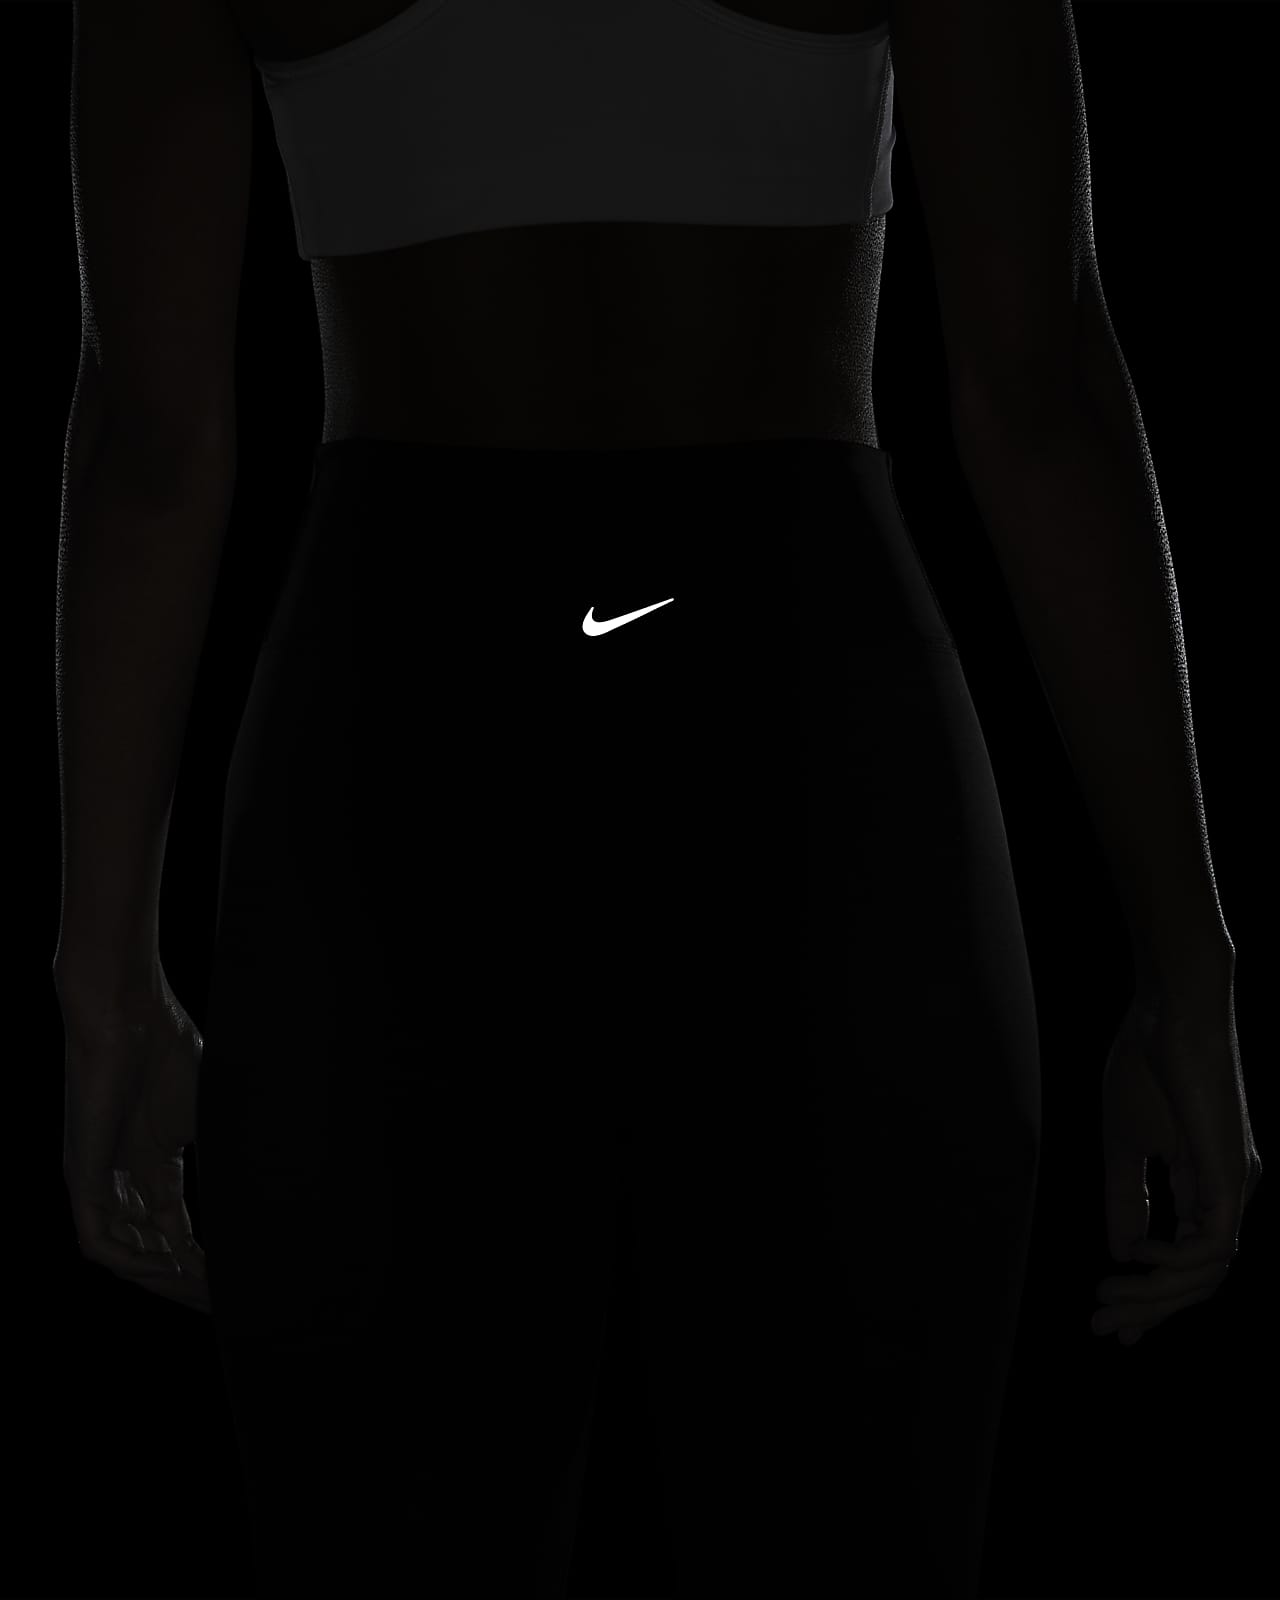 NEW! Nike Shield Women's Running Pants BV3311-010 Color Black Size Large